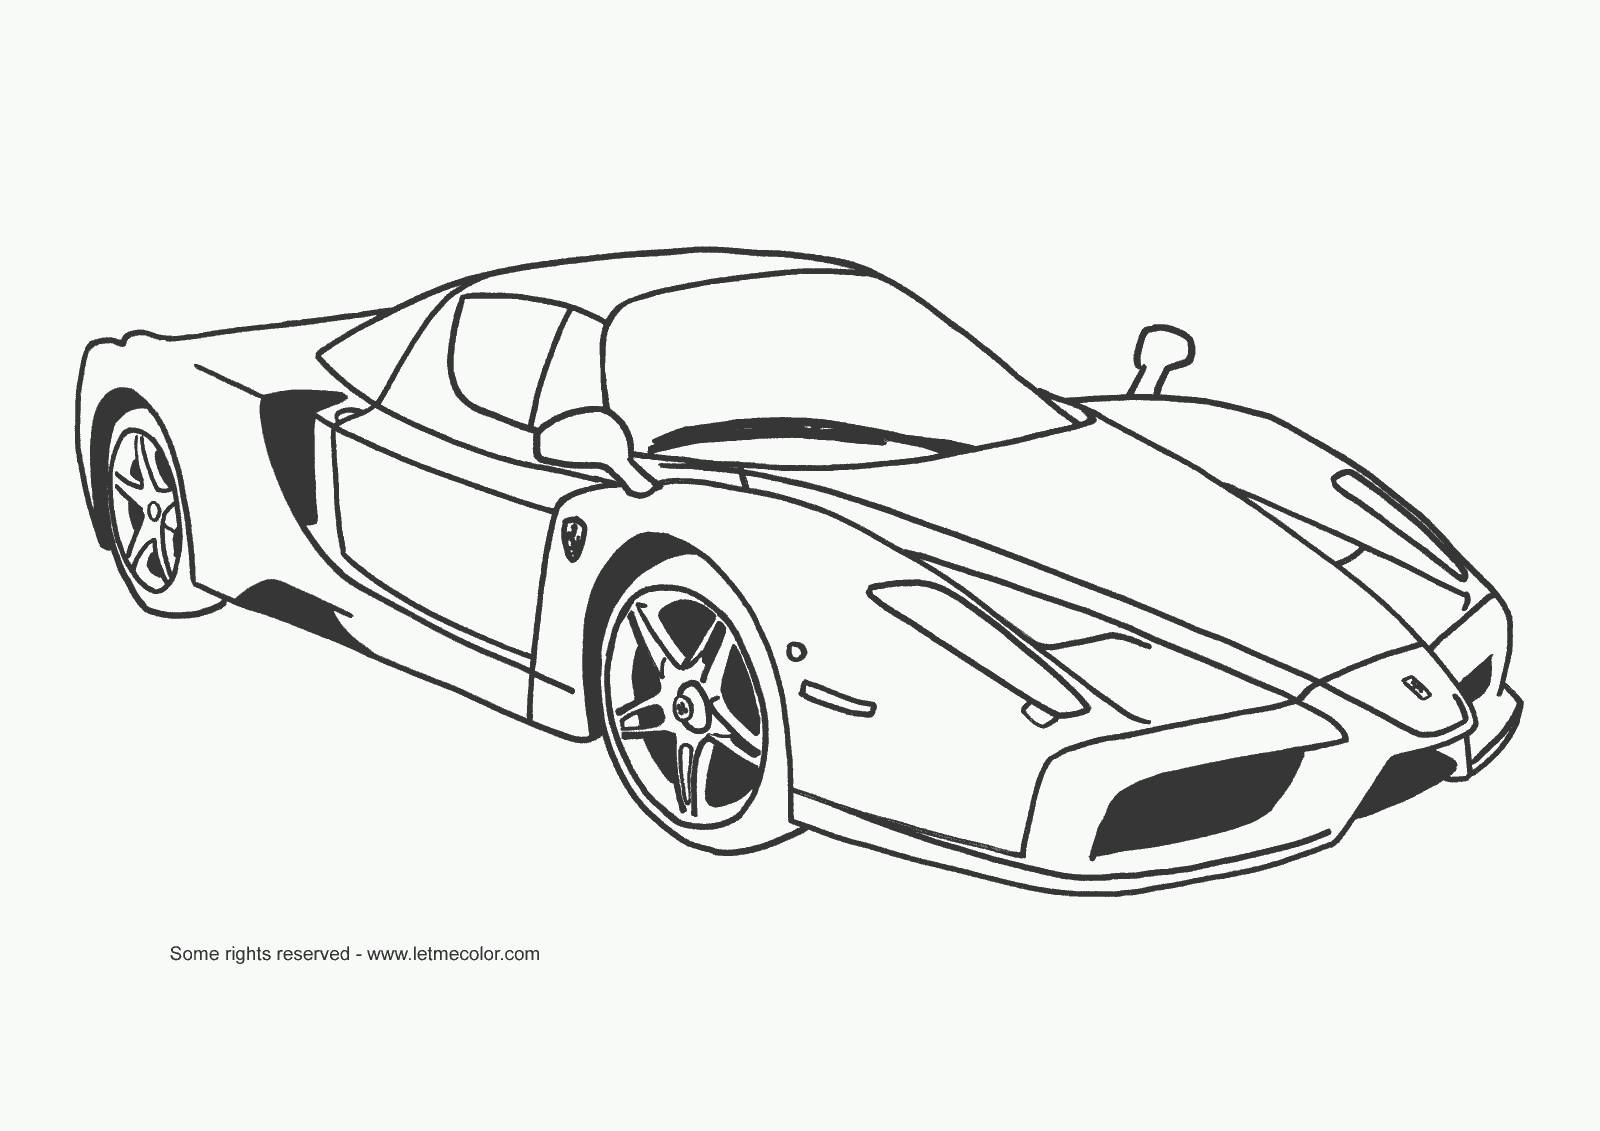  Grand Theft Auto V coloring pages – Grand Theft Auto – Ferrari Enzo